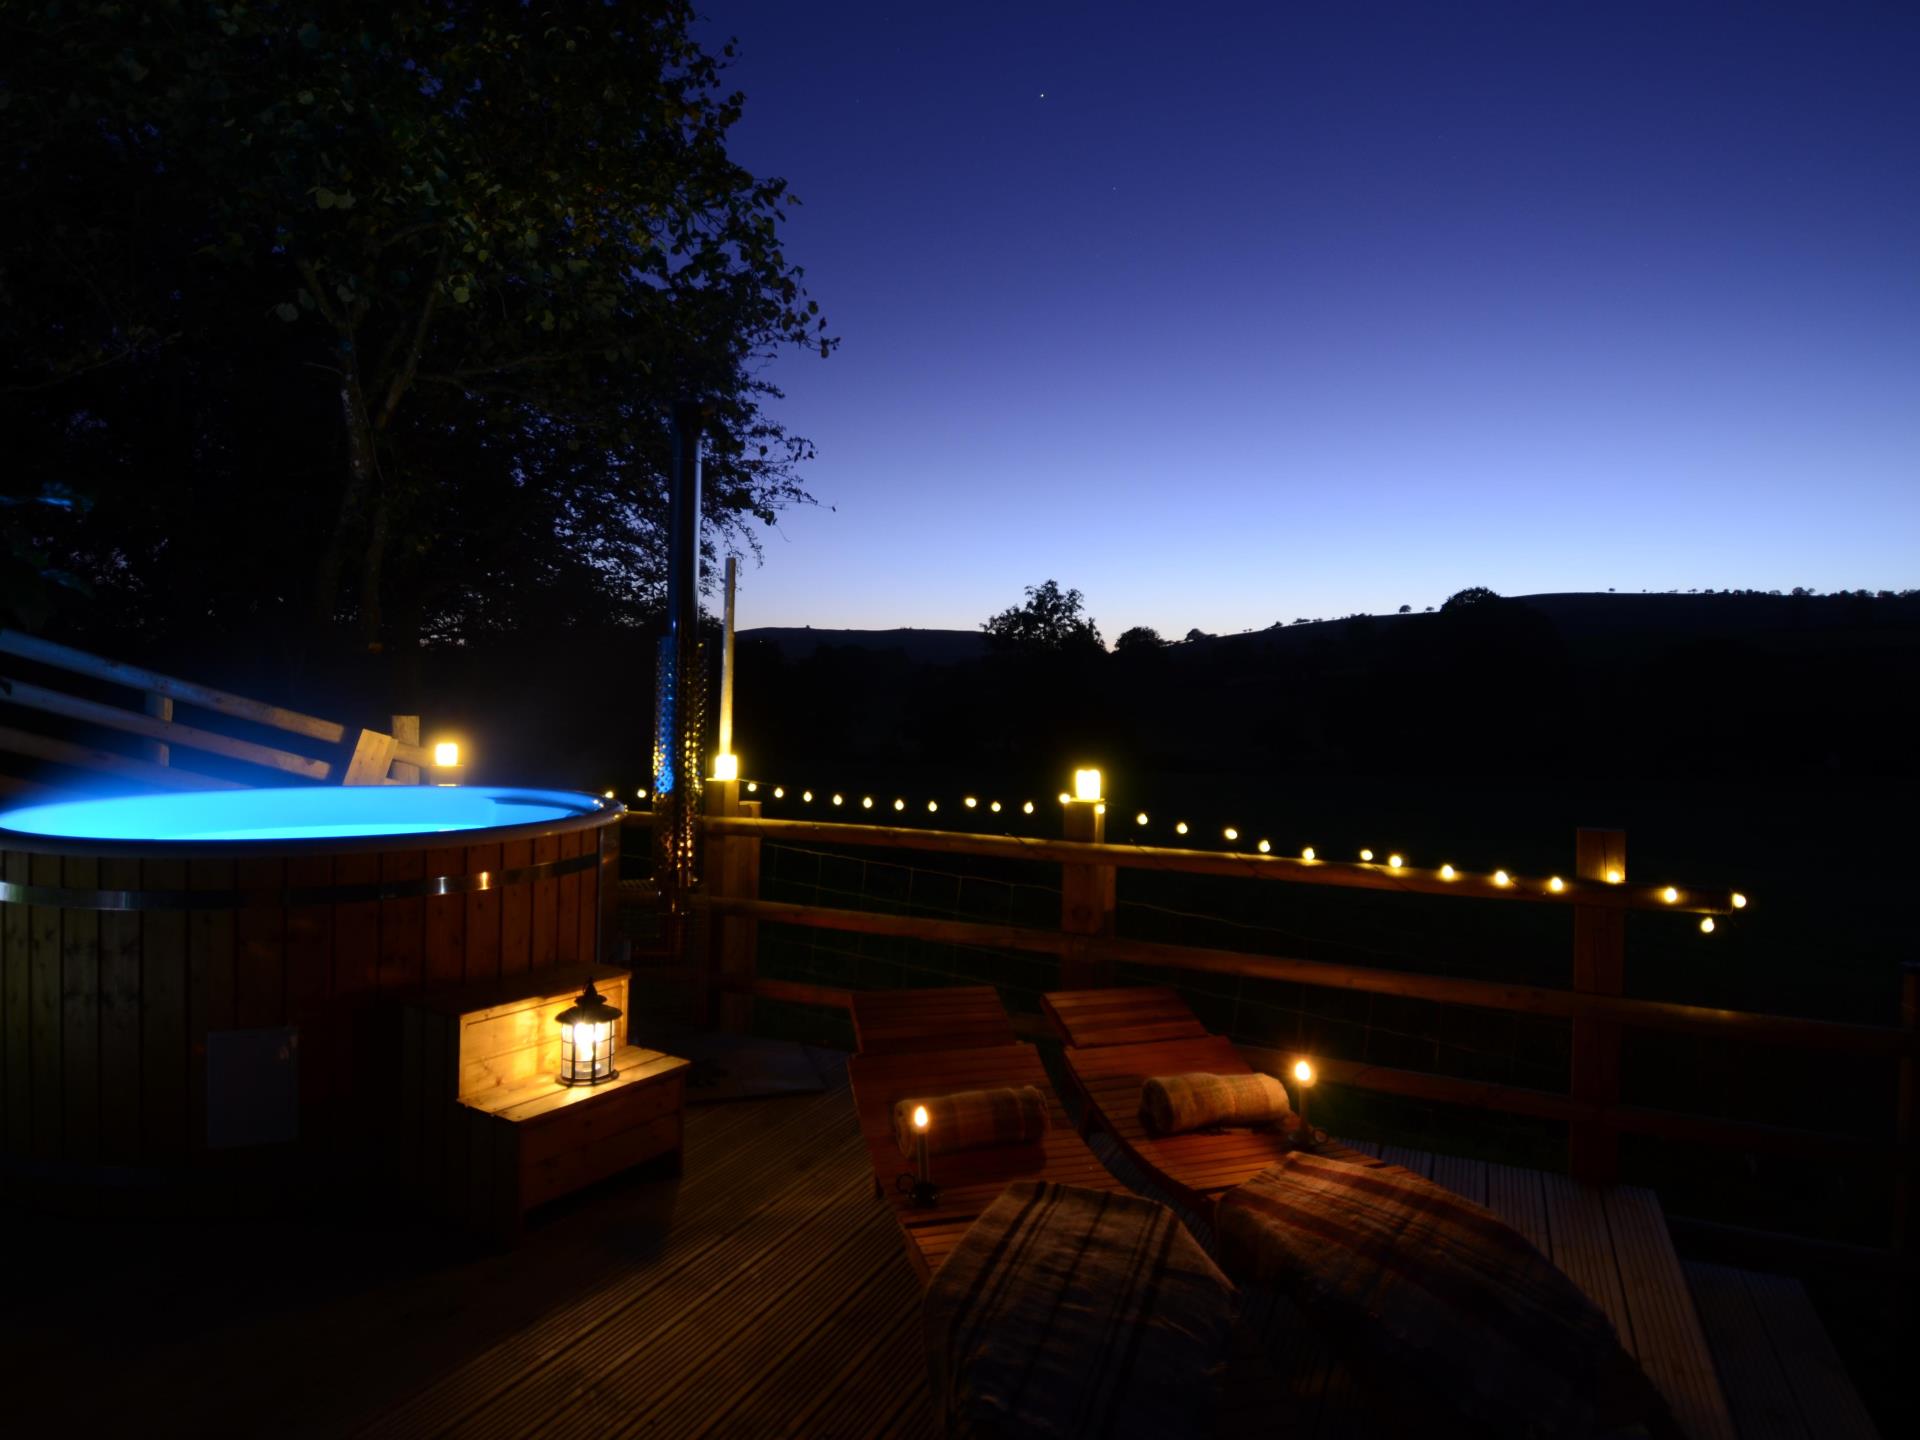 Hot tub evening under the stars